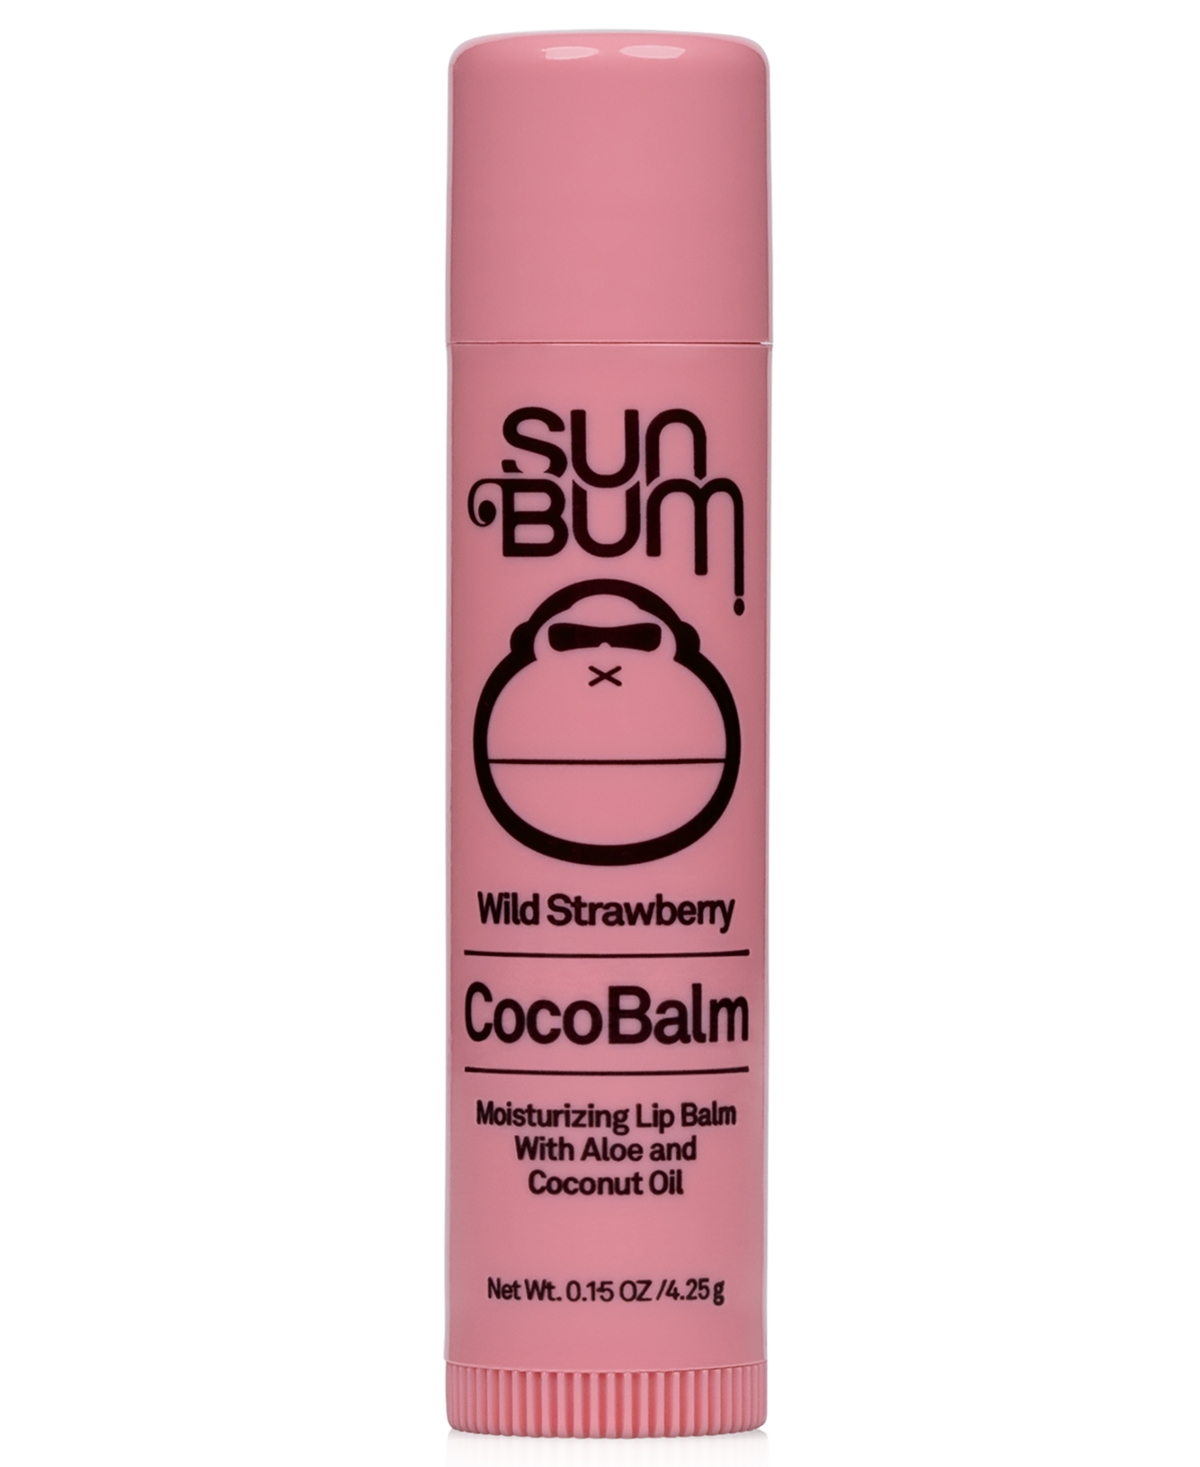 Coco Balm Moisturizing Lip Balm, 0.15 oz. - Banana Cream